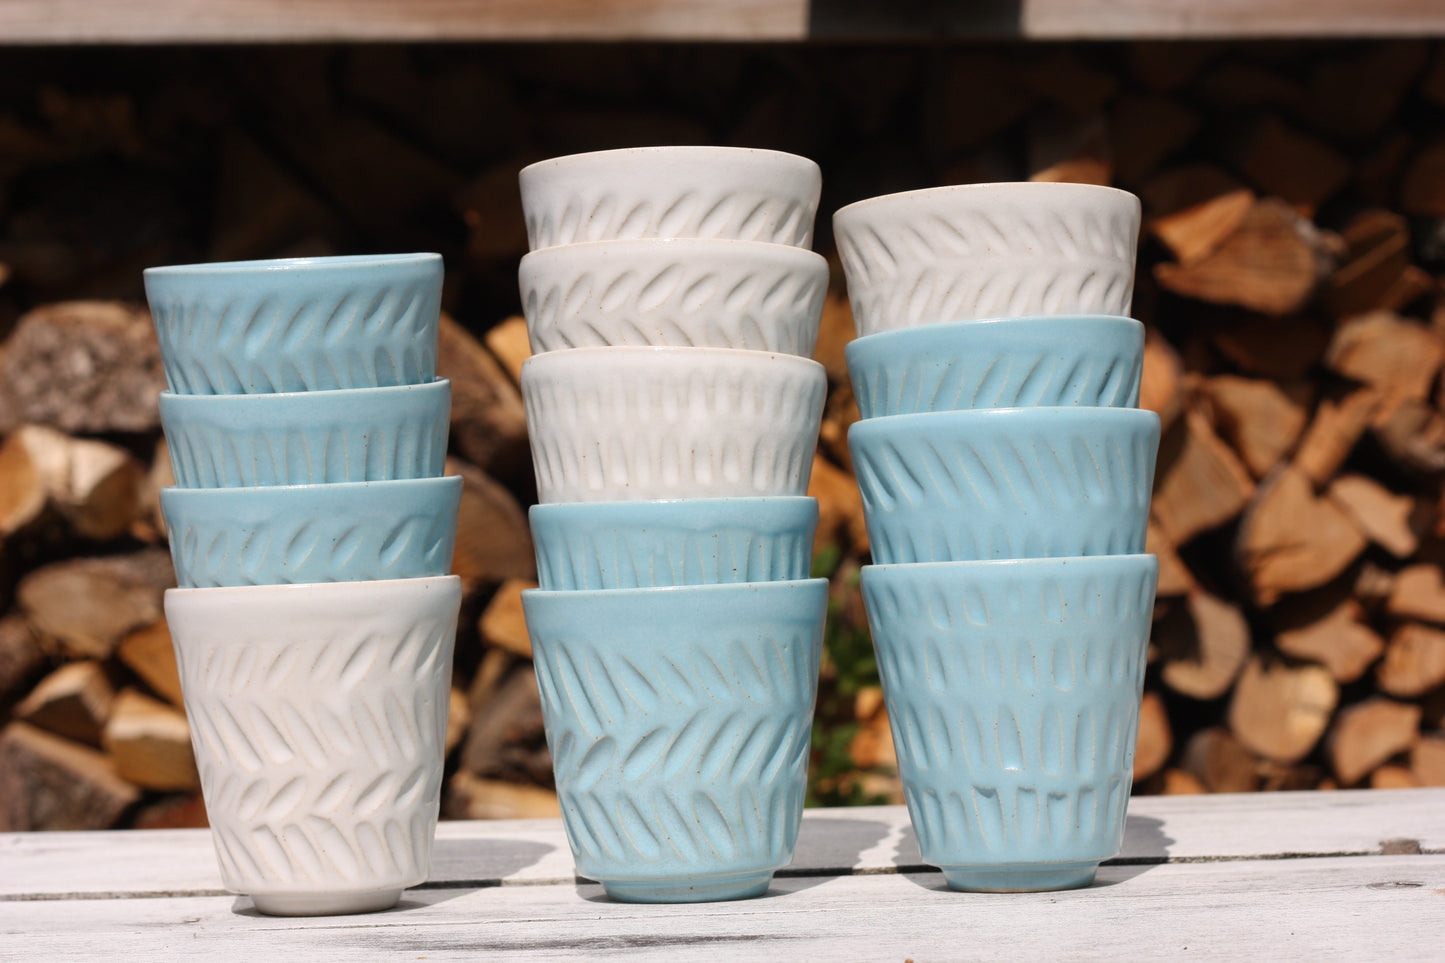 350ml 12 oz Carved Pottery Latte Cup Handle free Mug handmade stacking ceramic cup beaker tumbler G